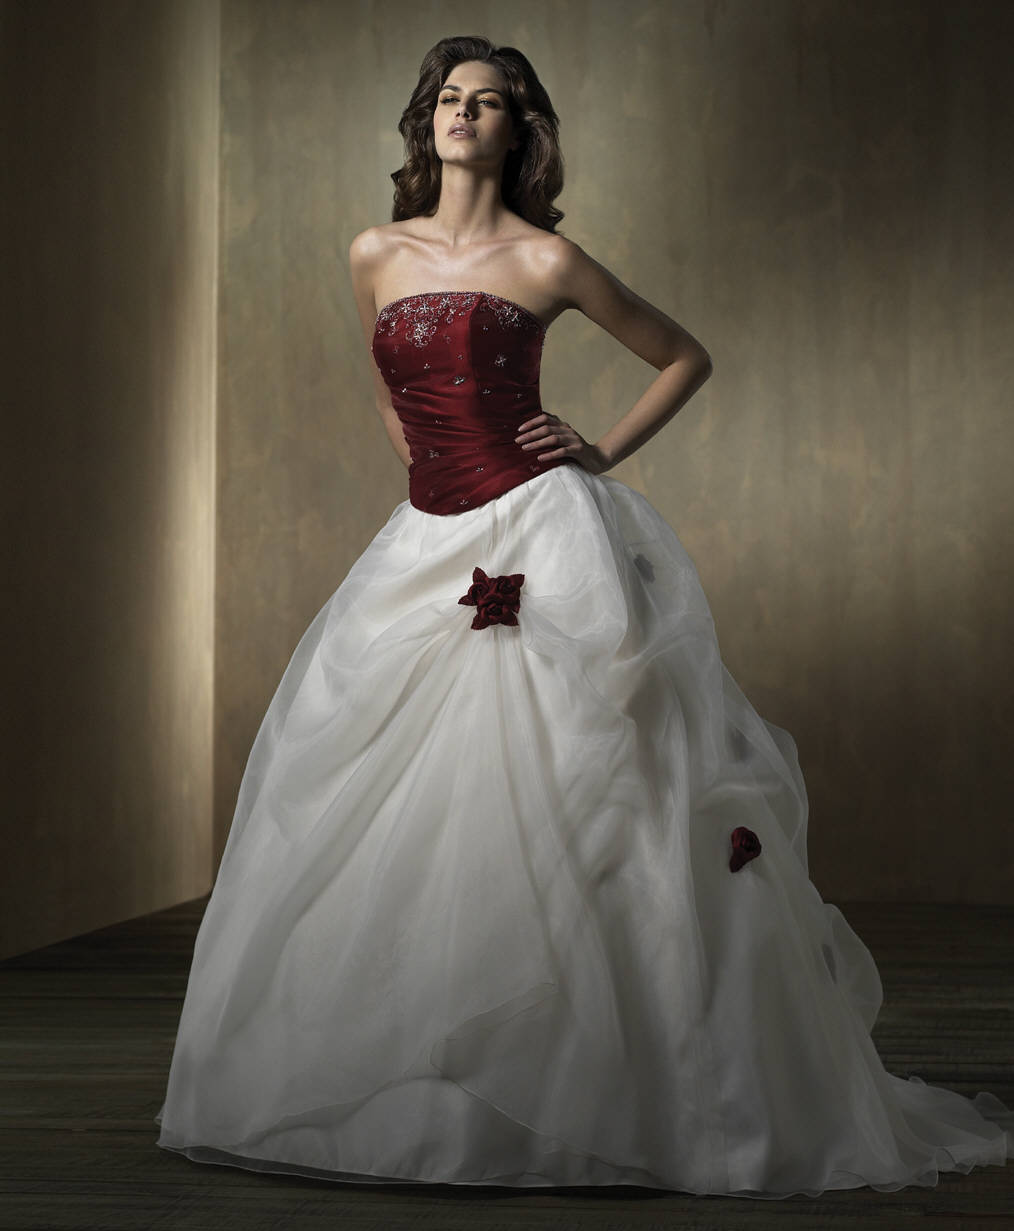 Orifashion Handmadestrapless wedding dress / gown 052 - Click Image to Close